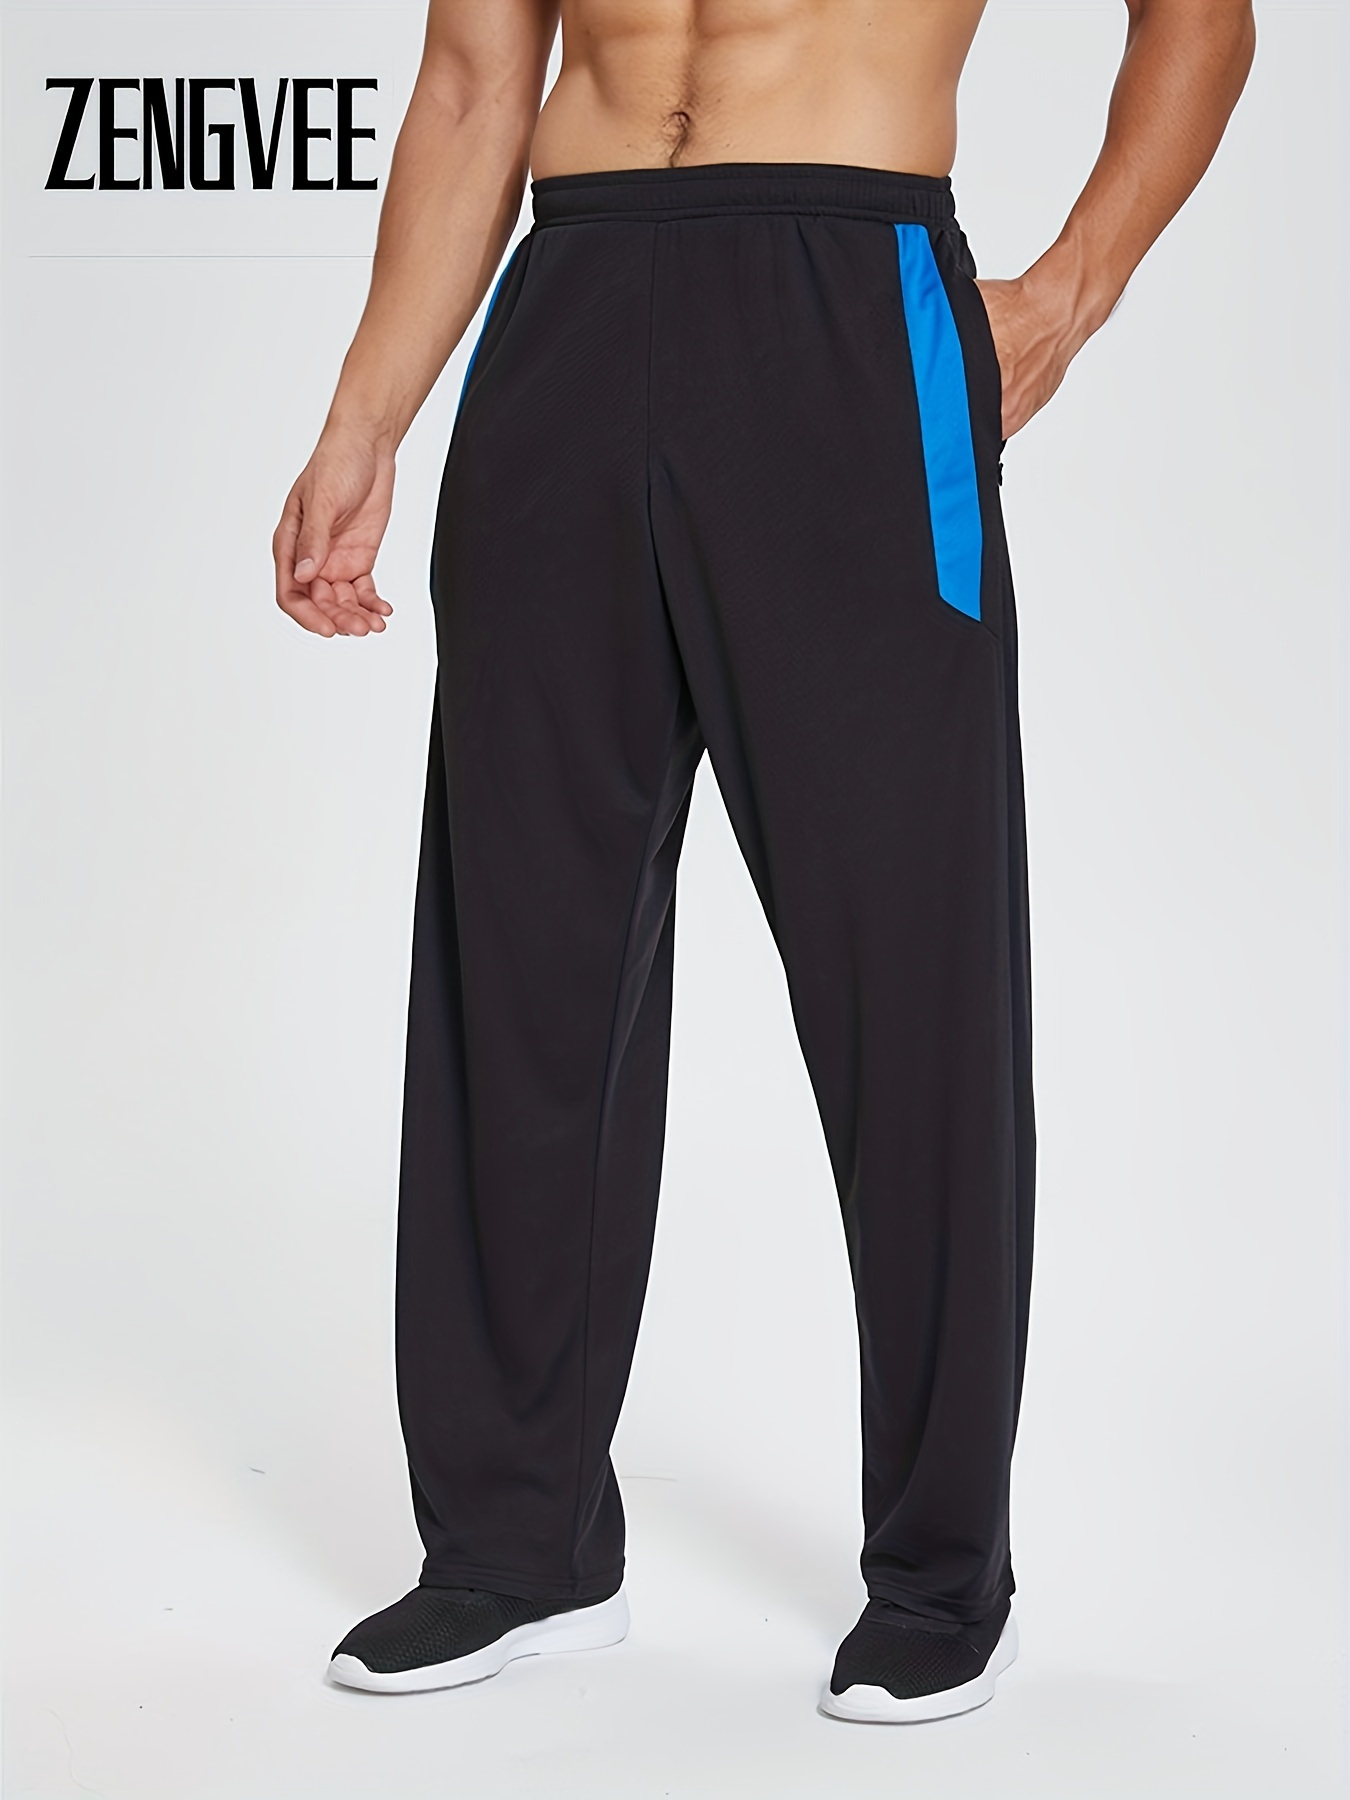 Men's Sweatpants Lounge Pants Open Bottom Loose Fit Sweat Pants Workout  Running